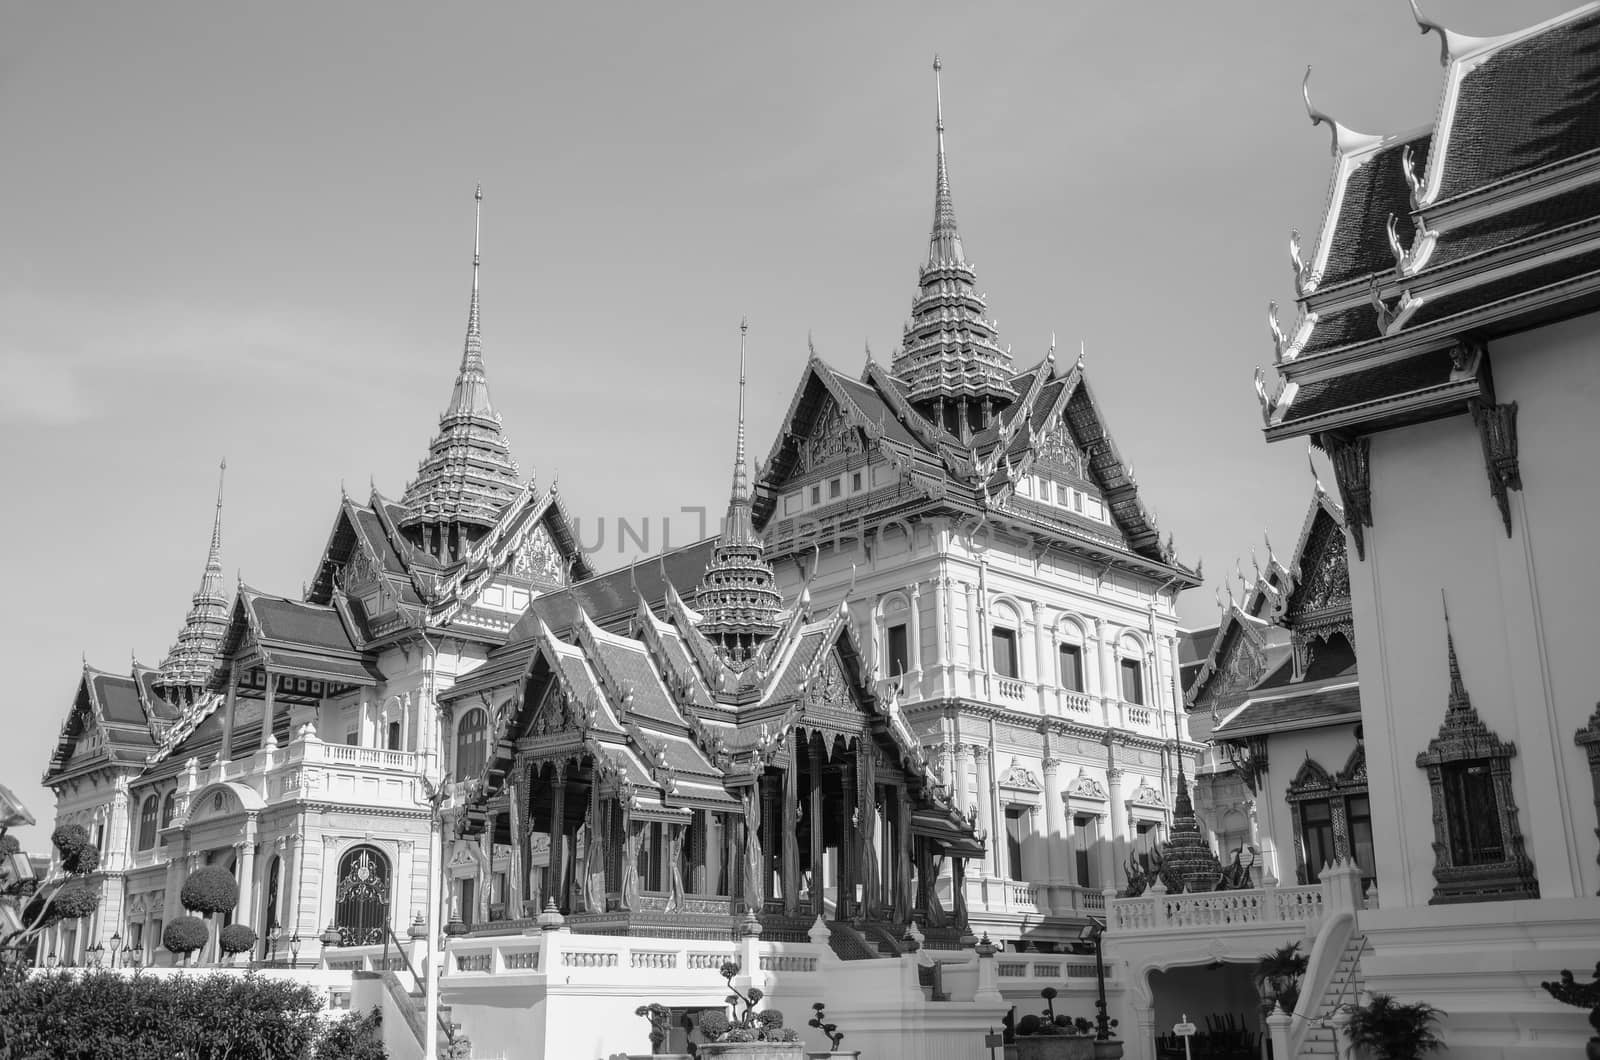 Grand Palace court and Chakri Maha Prasat building in Bangkok, Thailand - Black and White